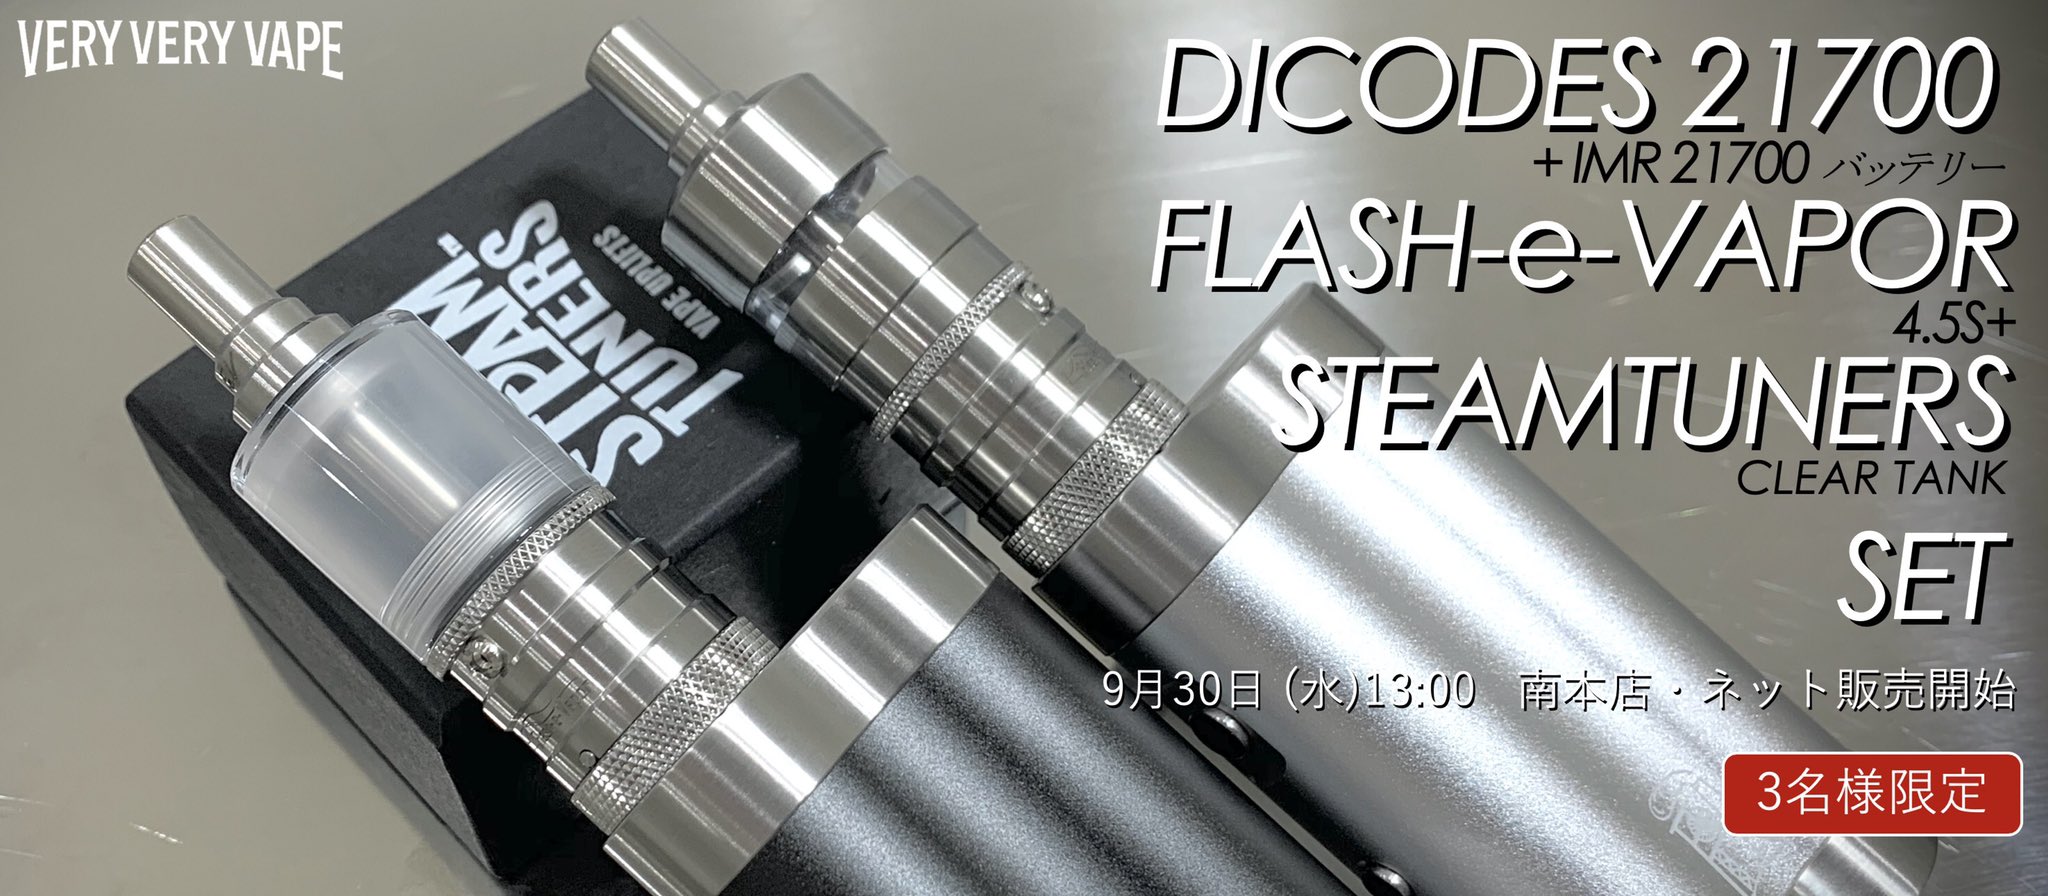 Steam Tuners Flash-e-Vapor Flash tankセット